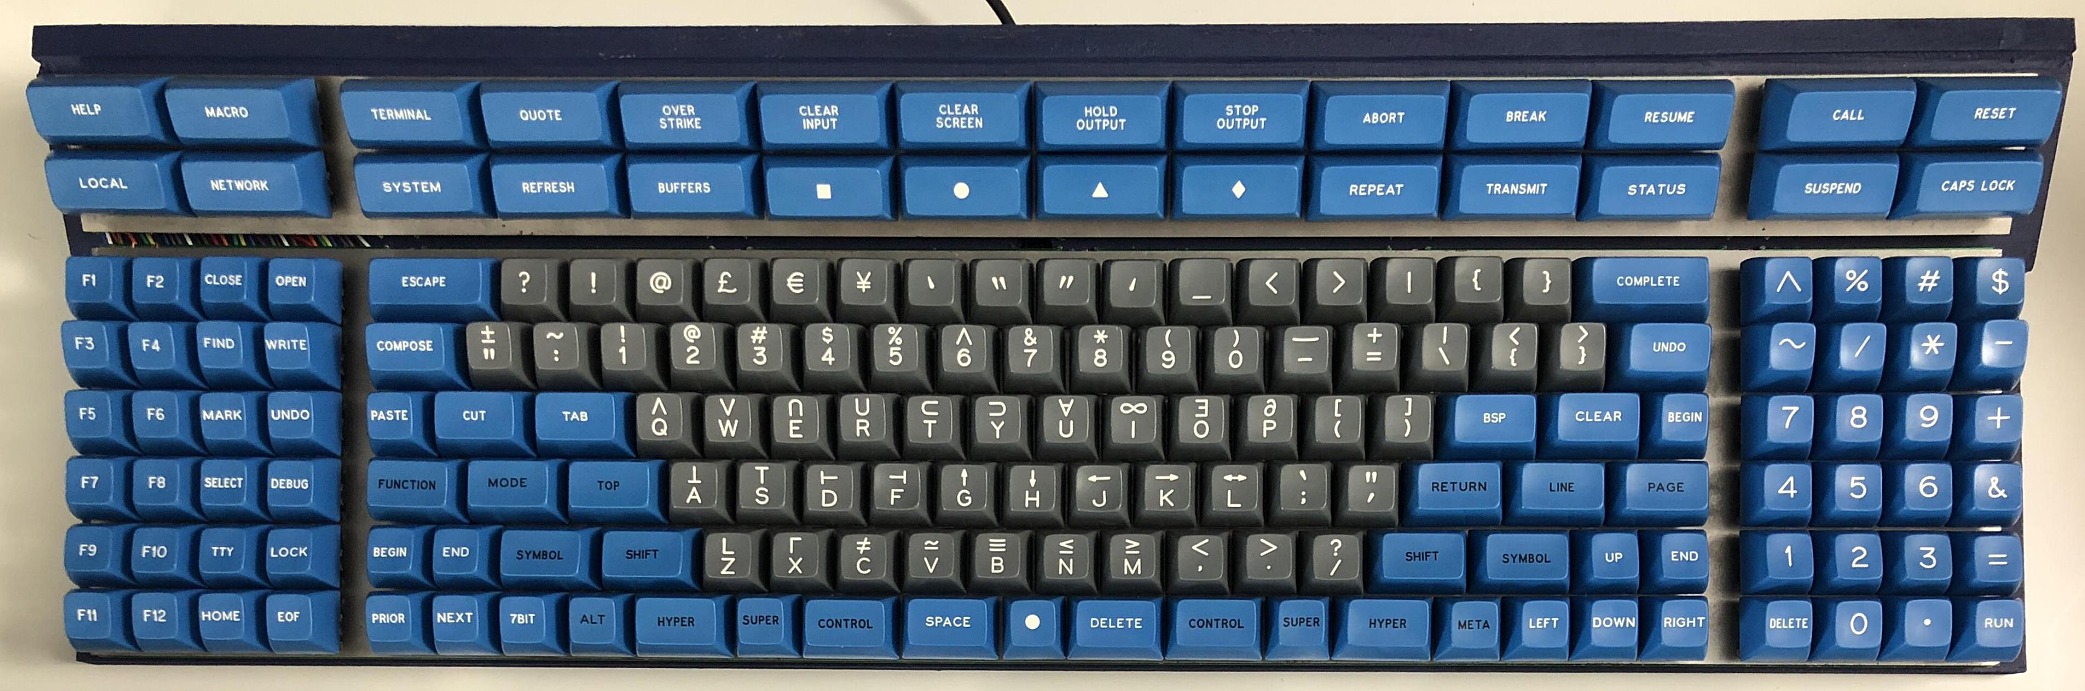 hyper 7 keyboard 9613f s2085x691